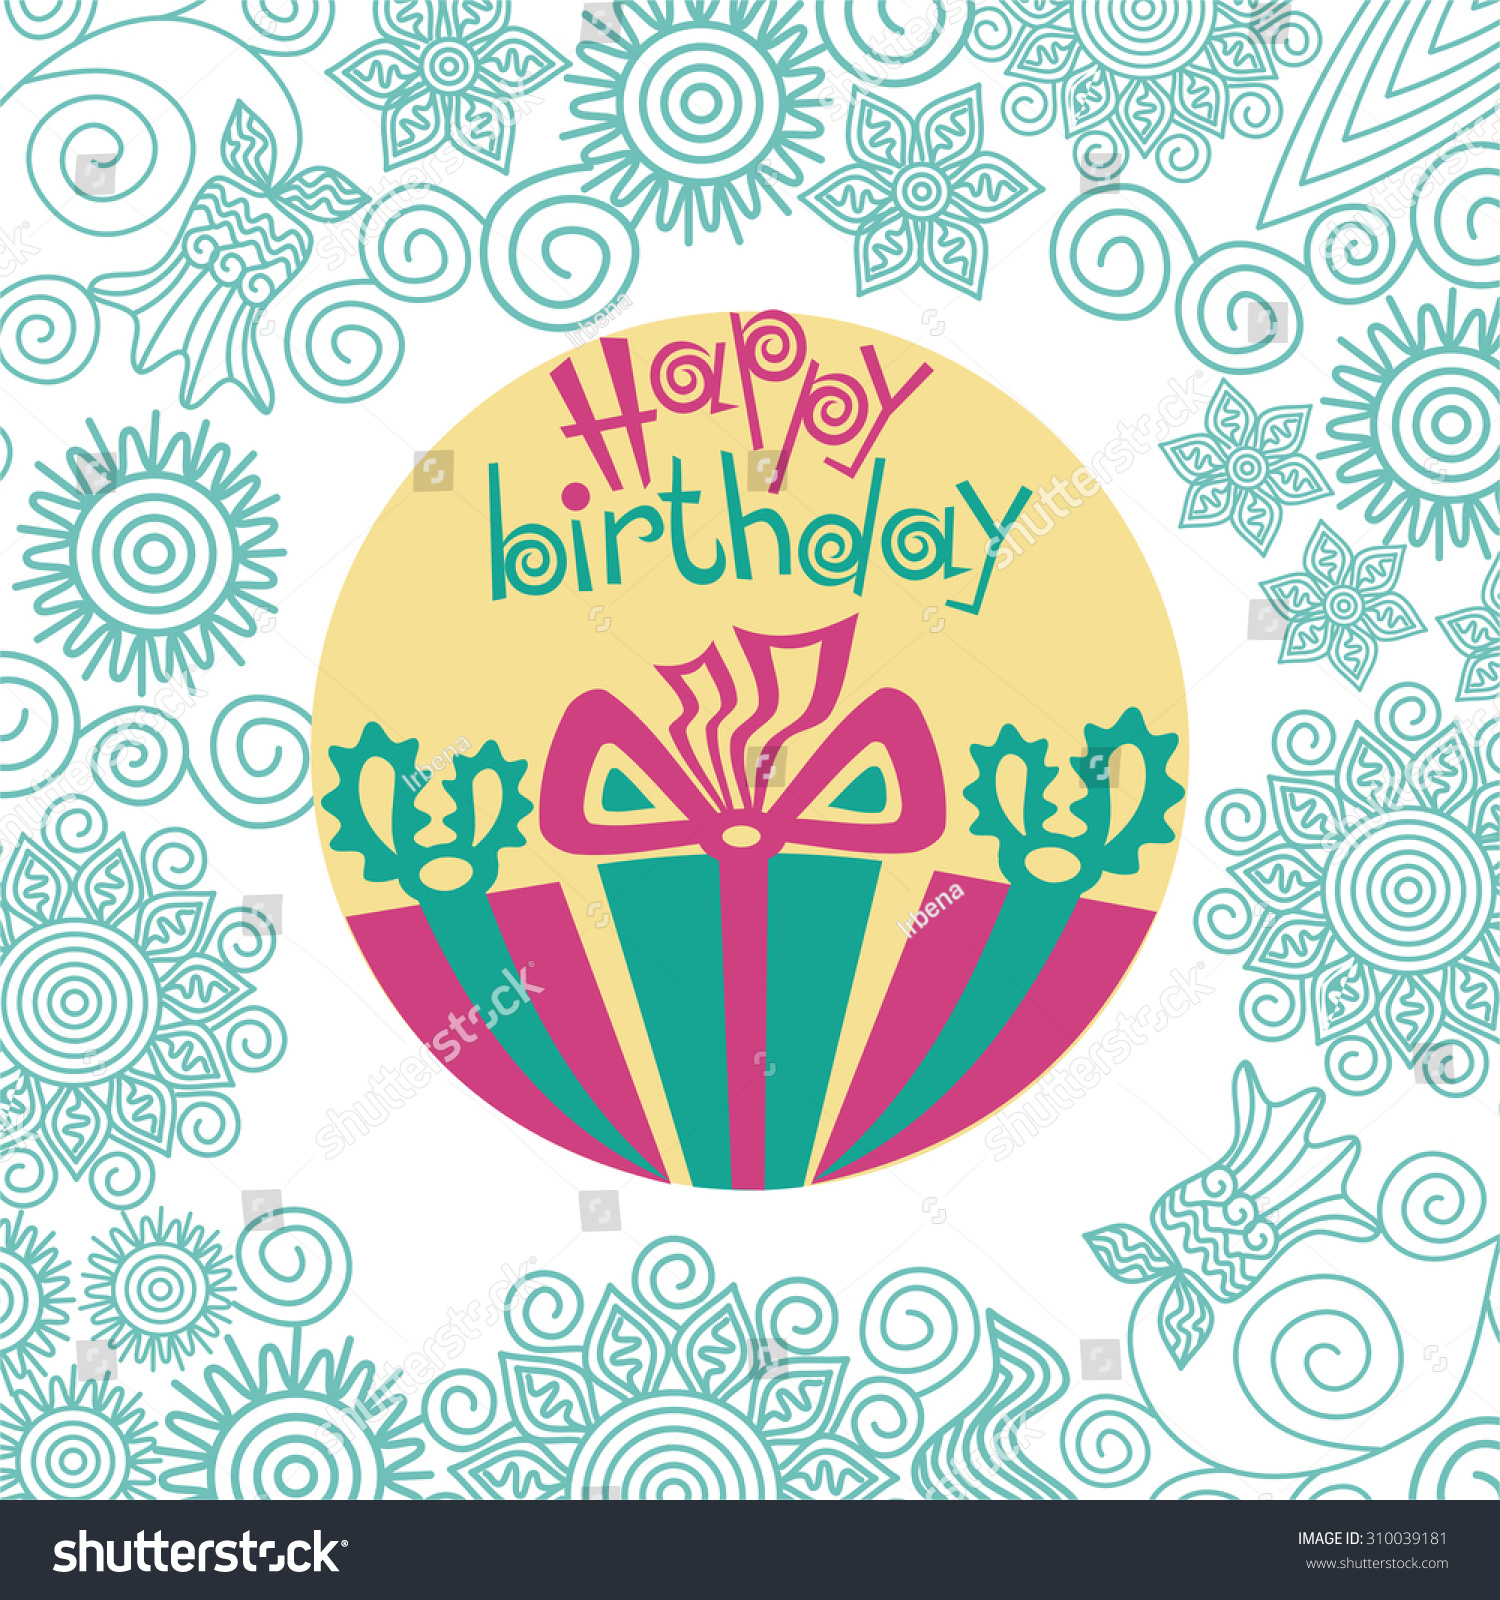 Happy Birthday Greeting Card Vector Illustration - 310039181 : Shutterstock